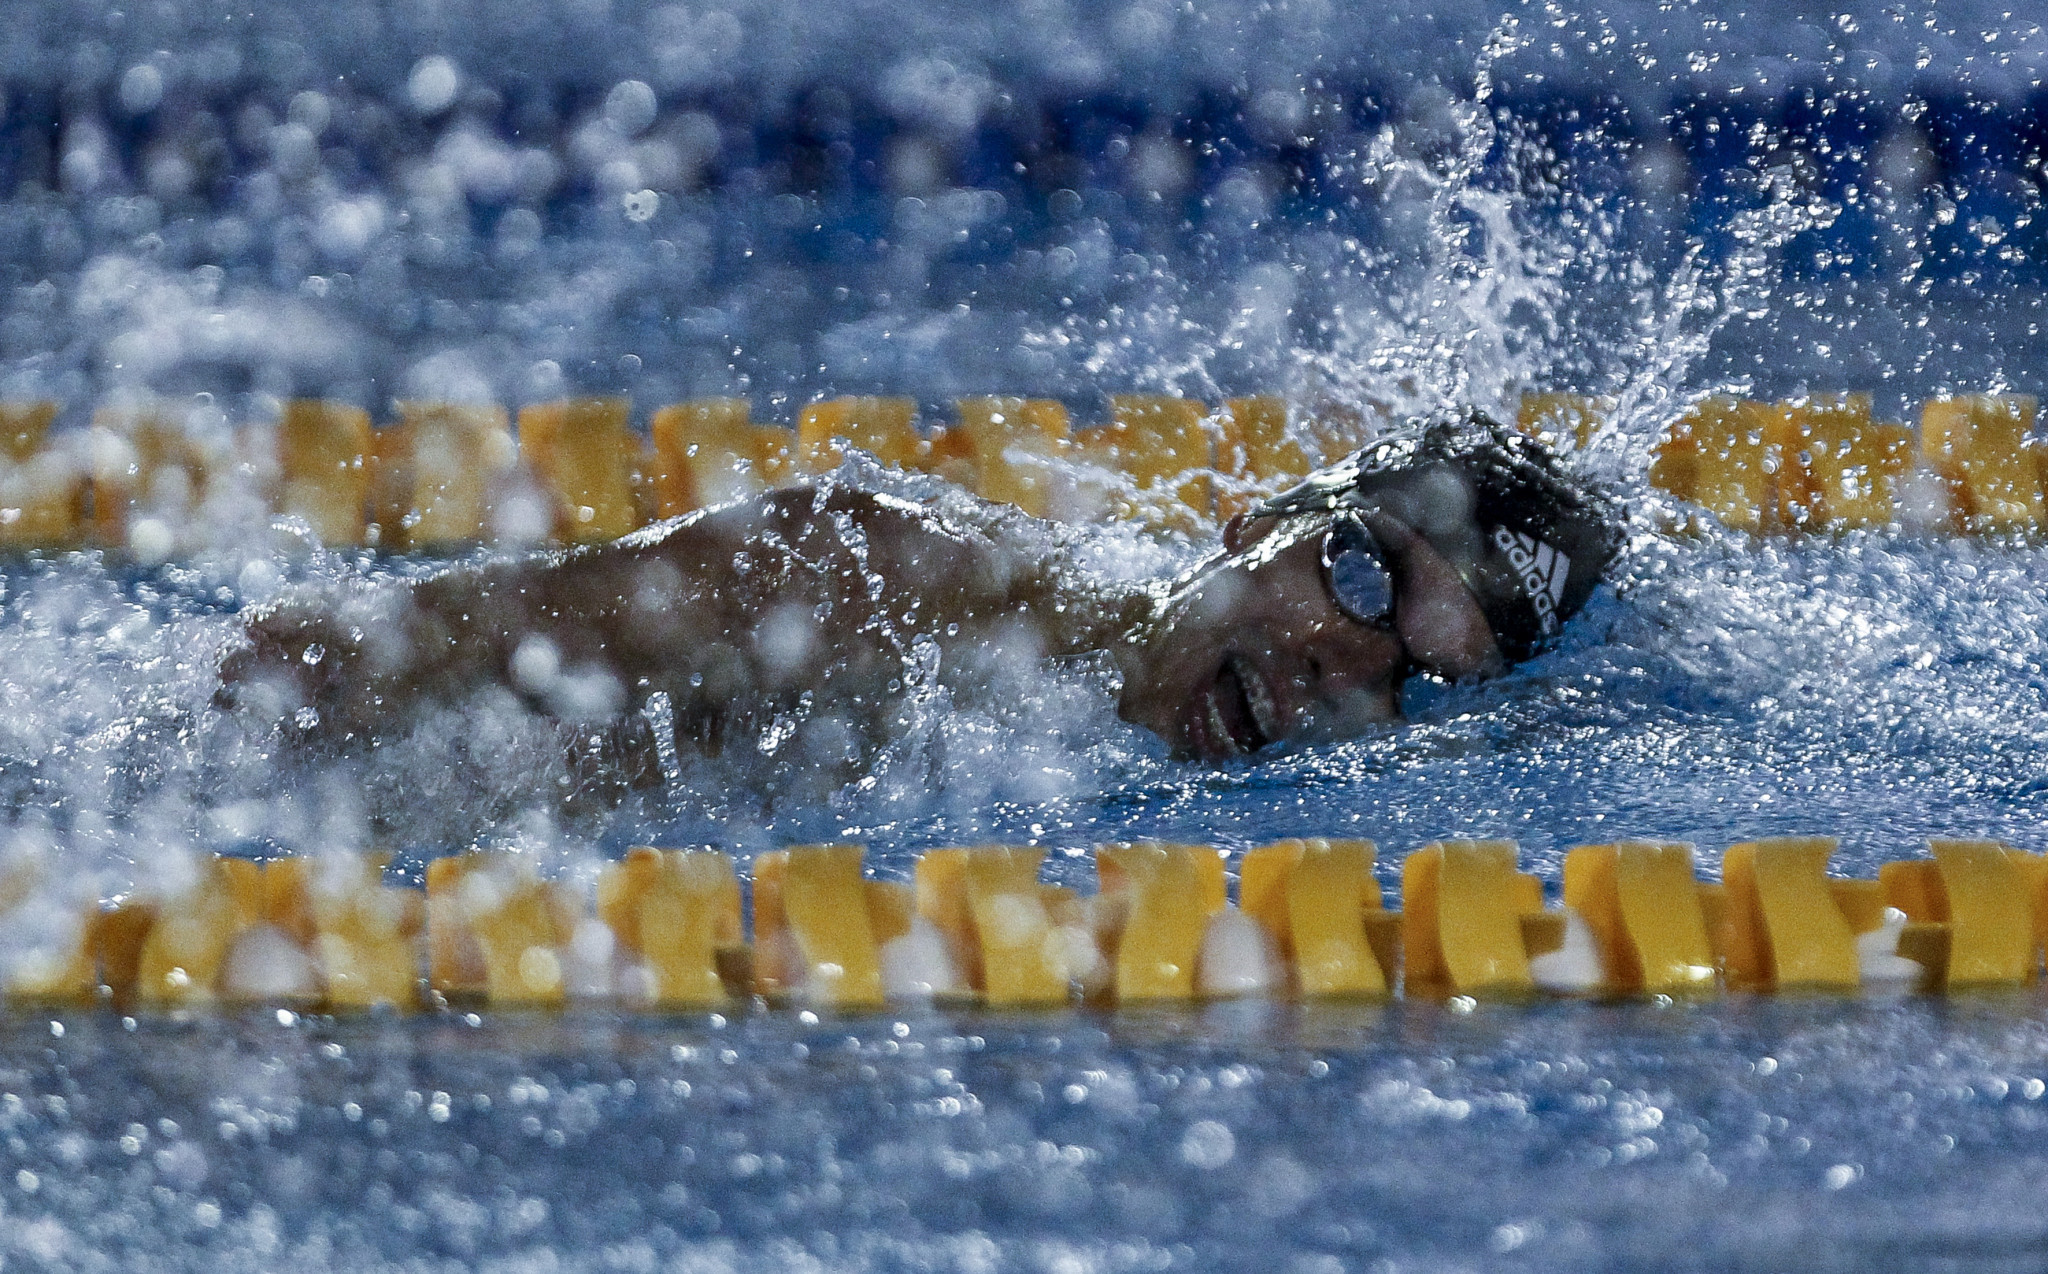 Dias triumphs in sprint event at World Para Swimming Series in São Paulo